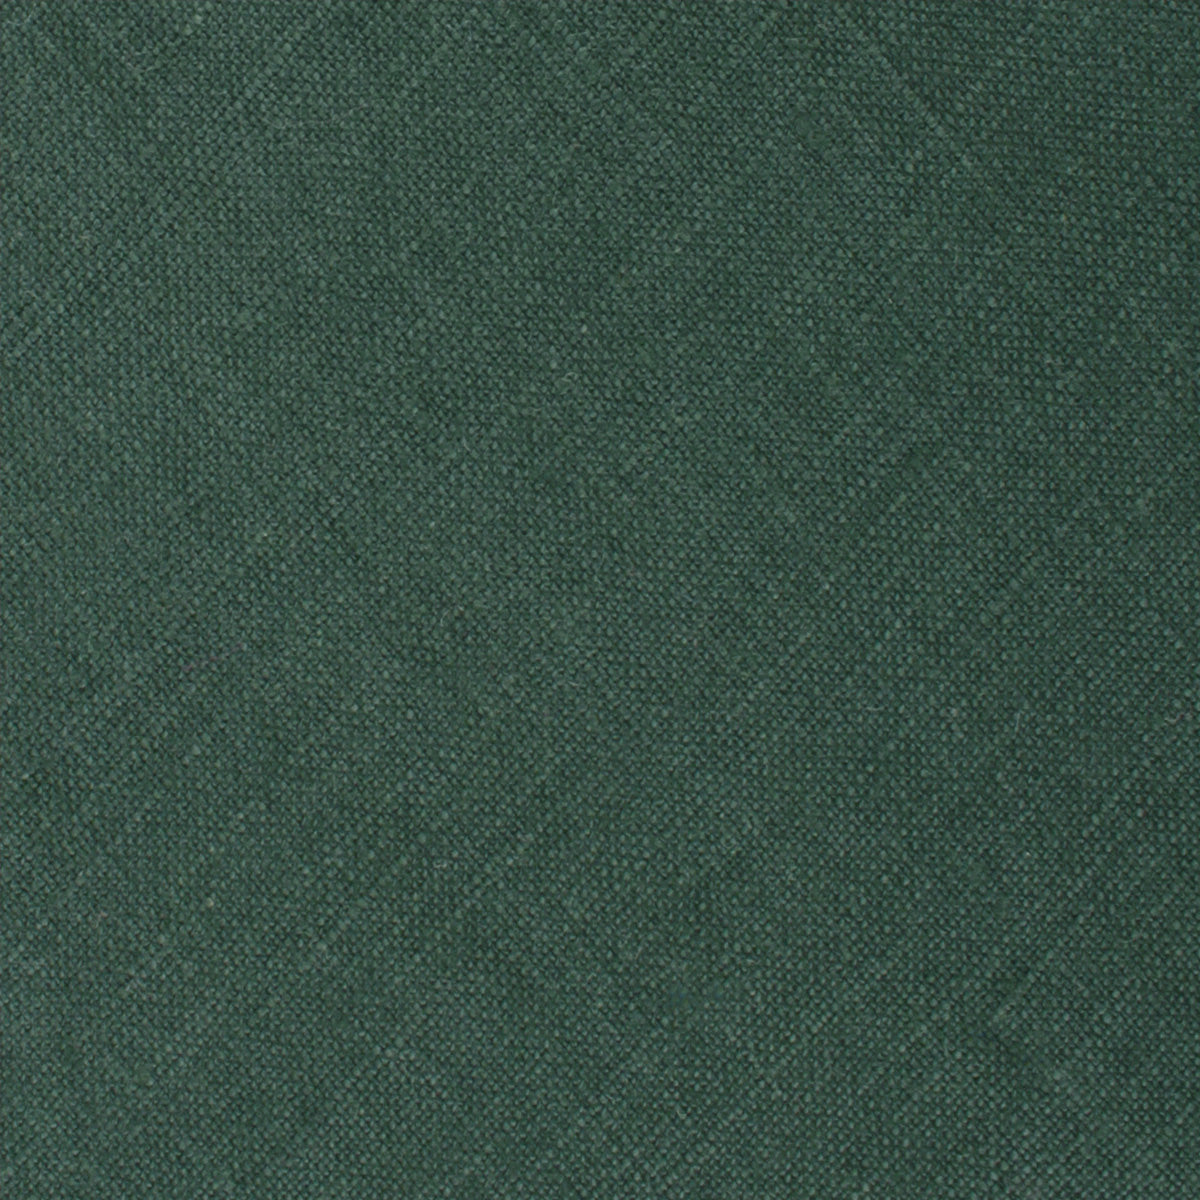 Dusty Emerald Green Linen Fabric Swatch